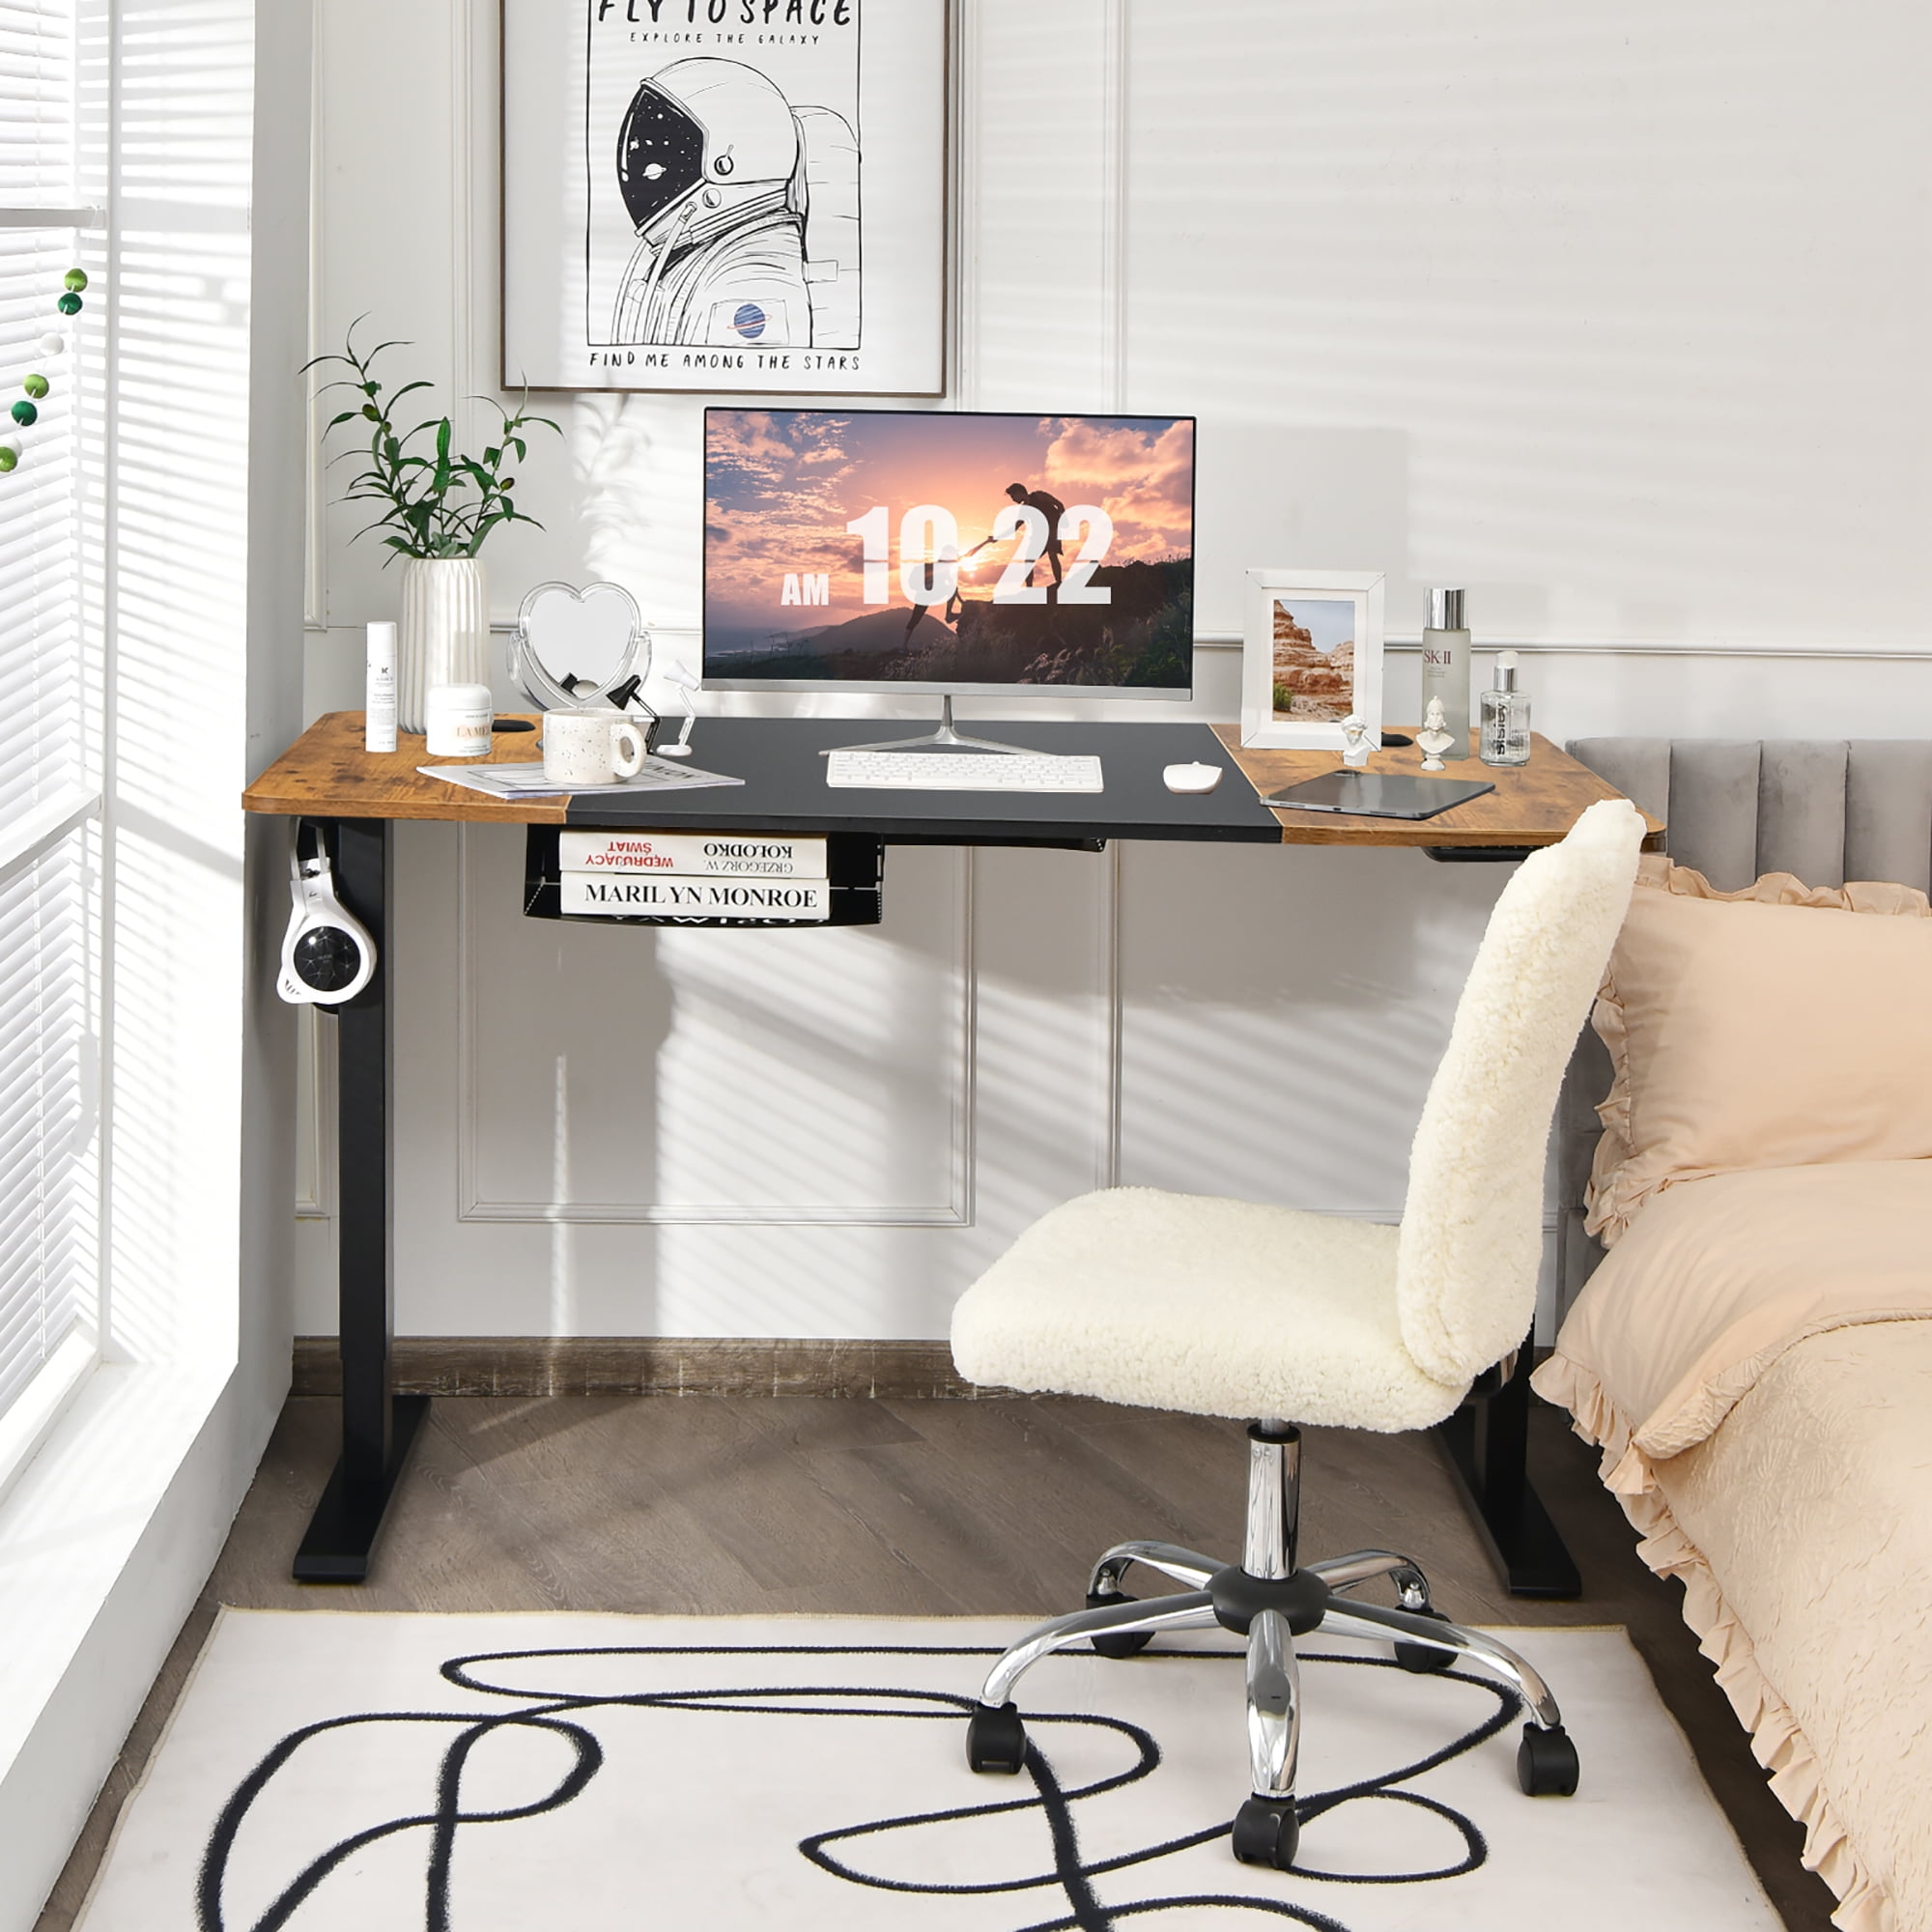 55''x28'' Electric Standing Desk Height Adjustable Sit Stand Desk w/USB  Port Black